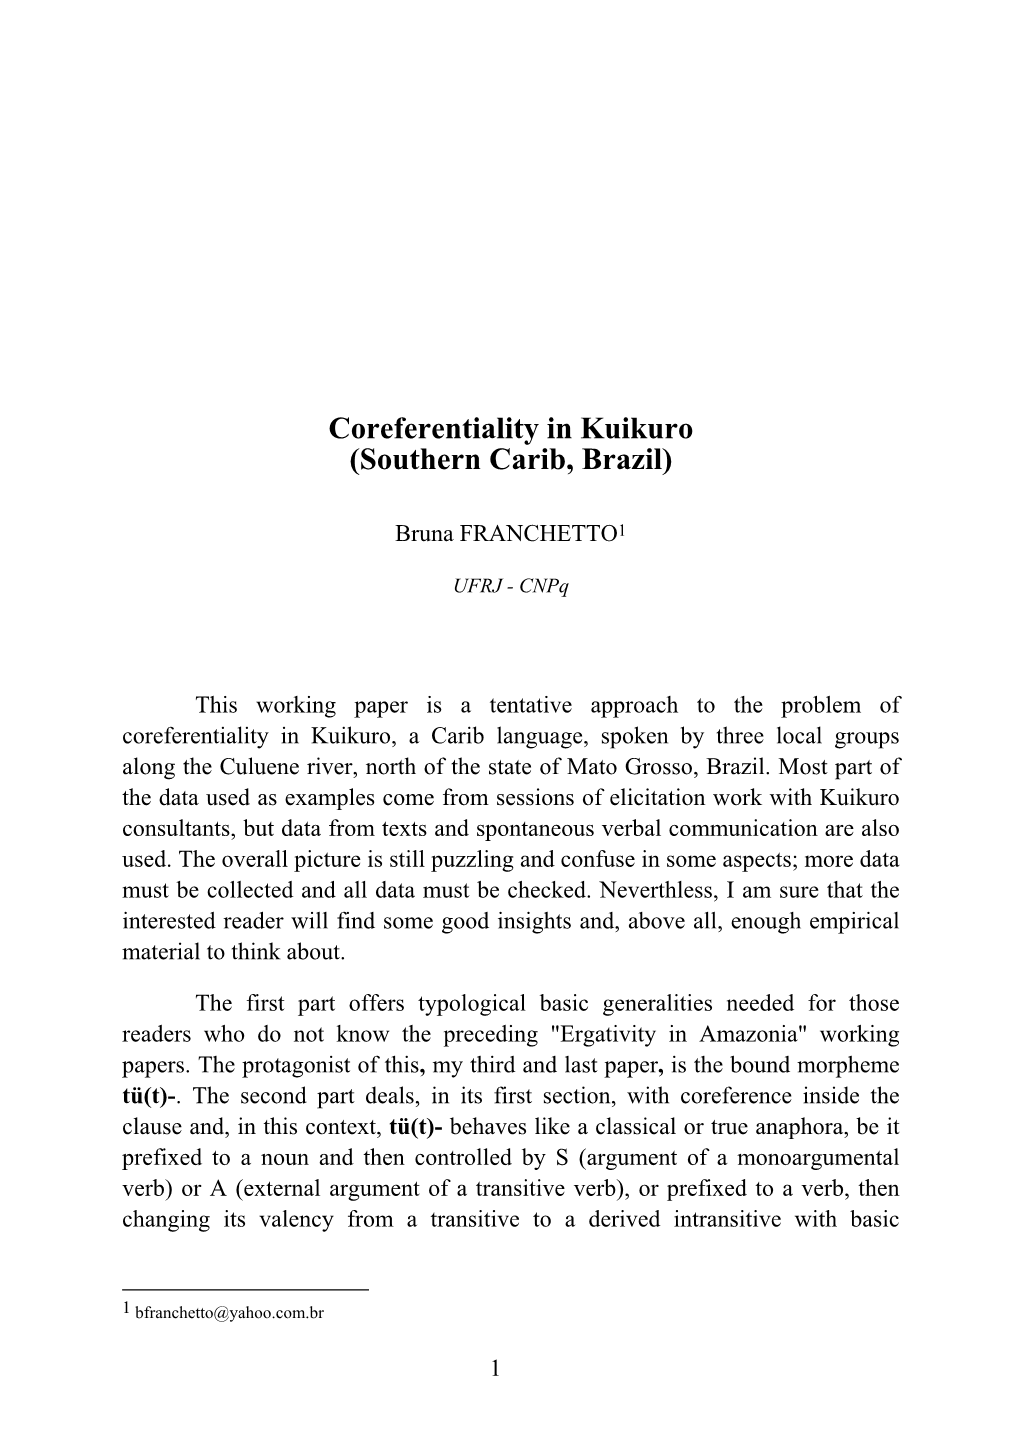 Coreferentiality in Kuikuro (Southern Carib, Brazil)